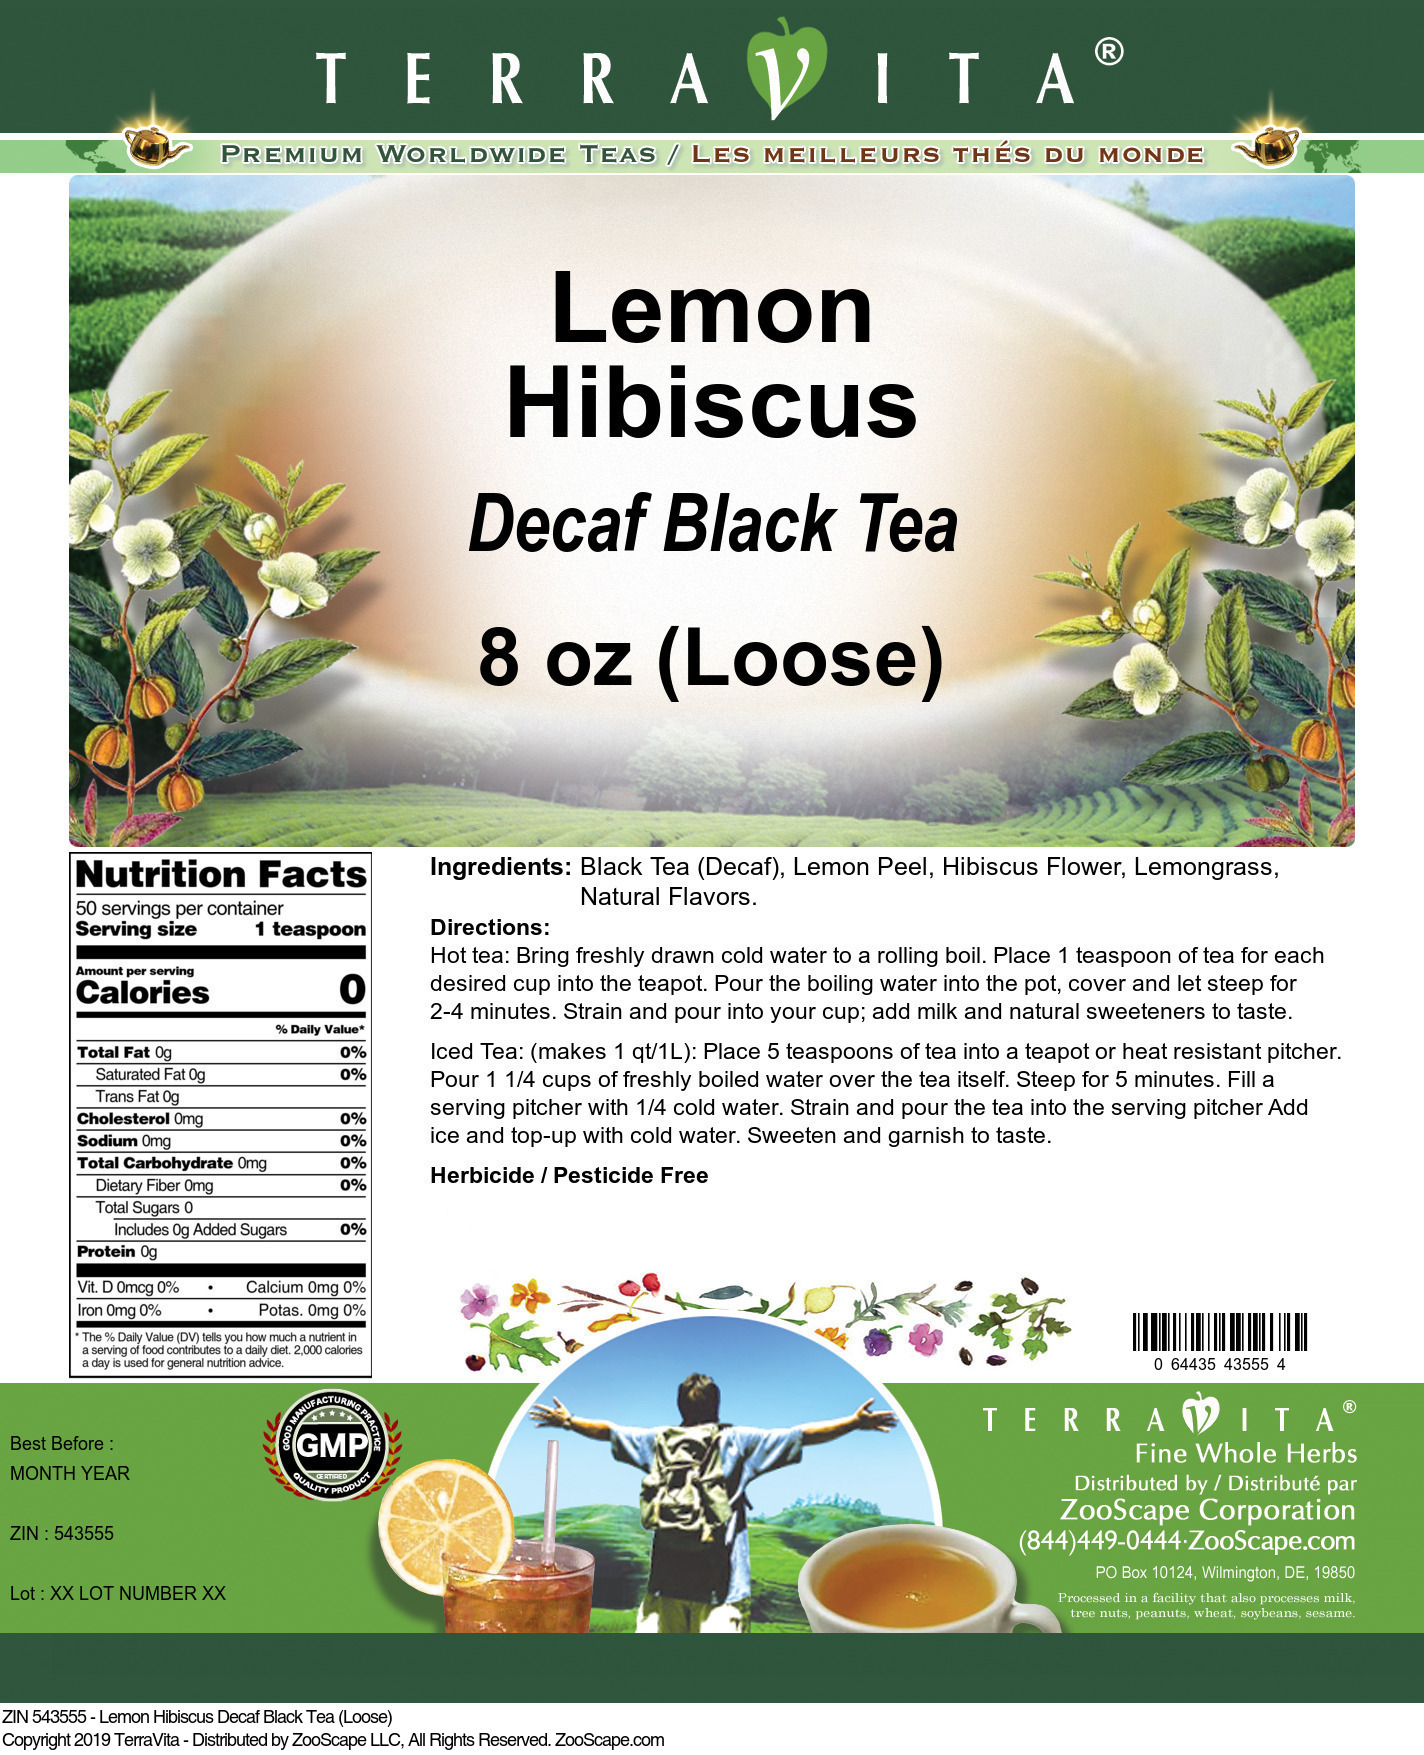 Lemon Hibiscus Decaf Black Tea (Loose) - Label